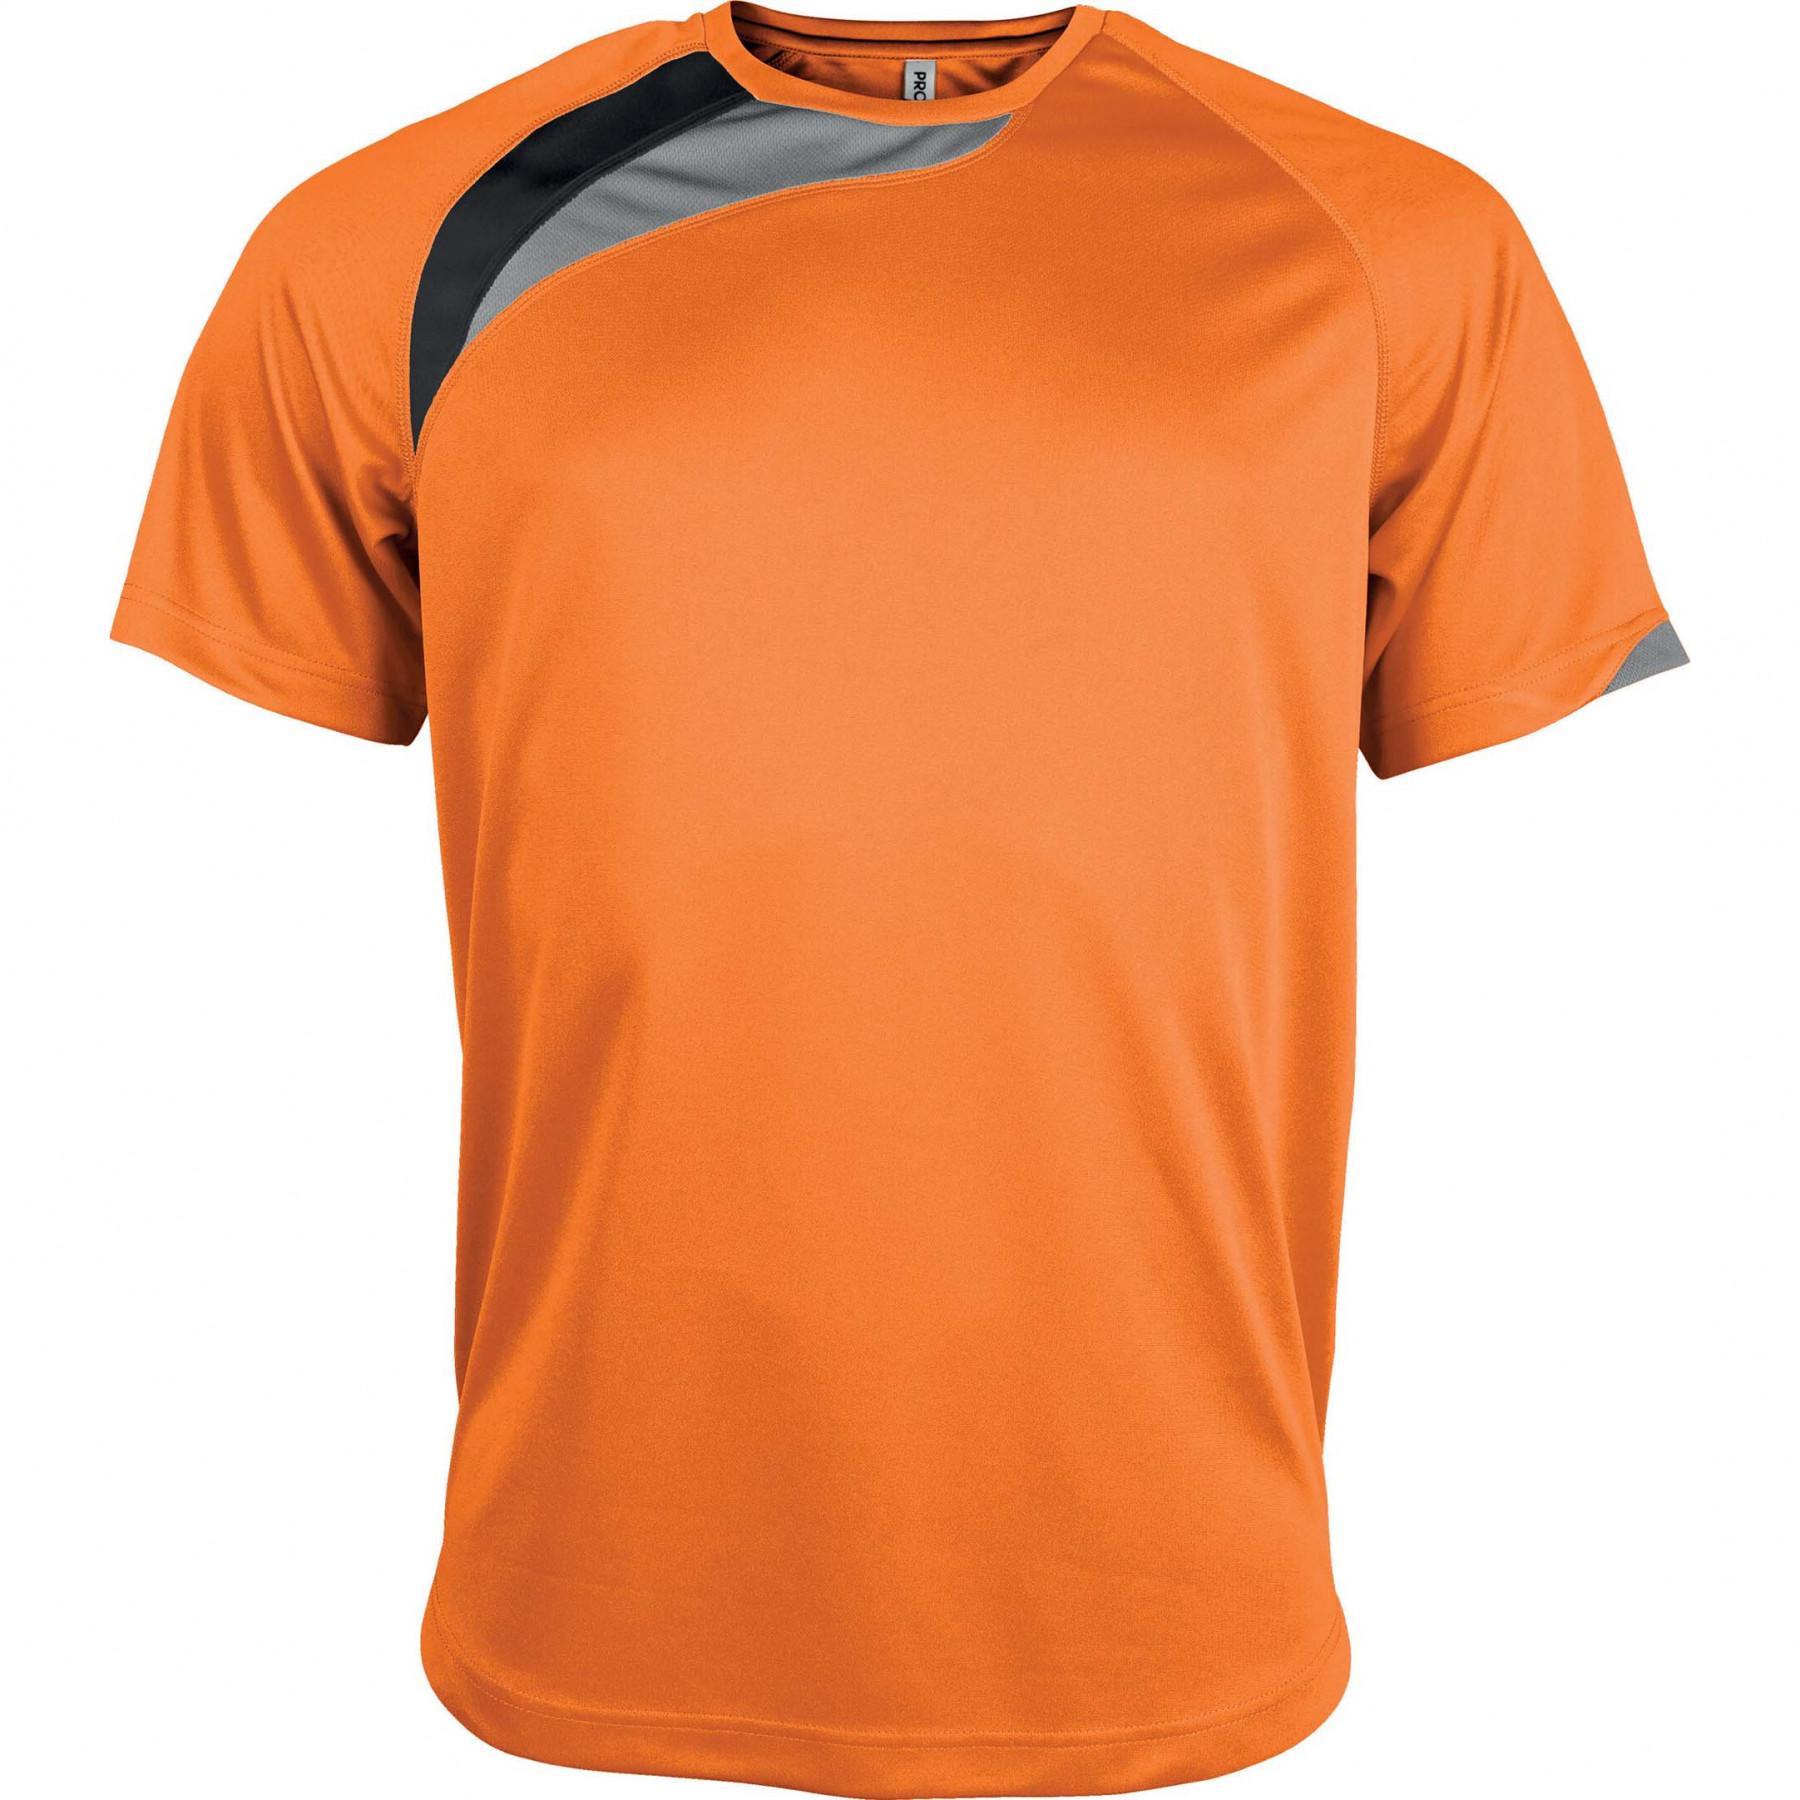 Short sleeve jersey Proact polyester